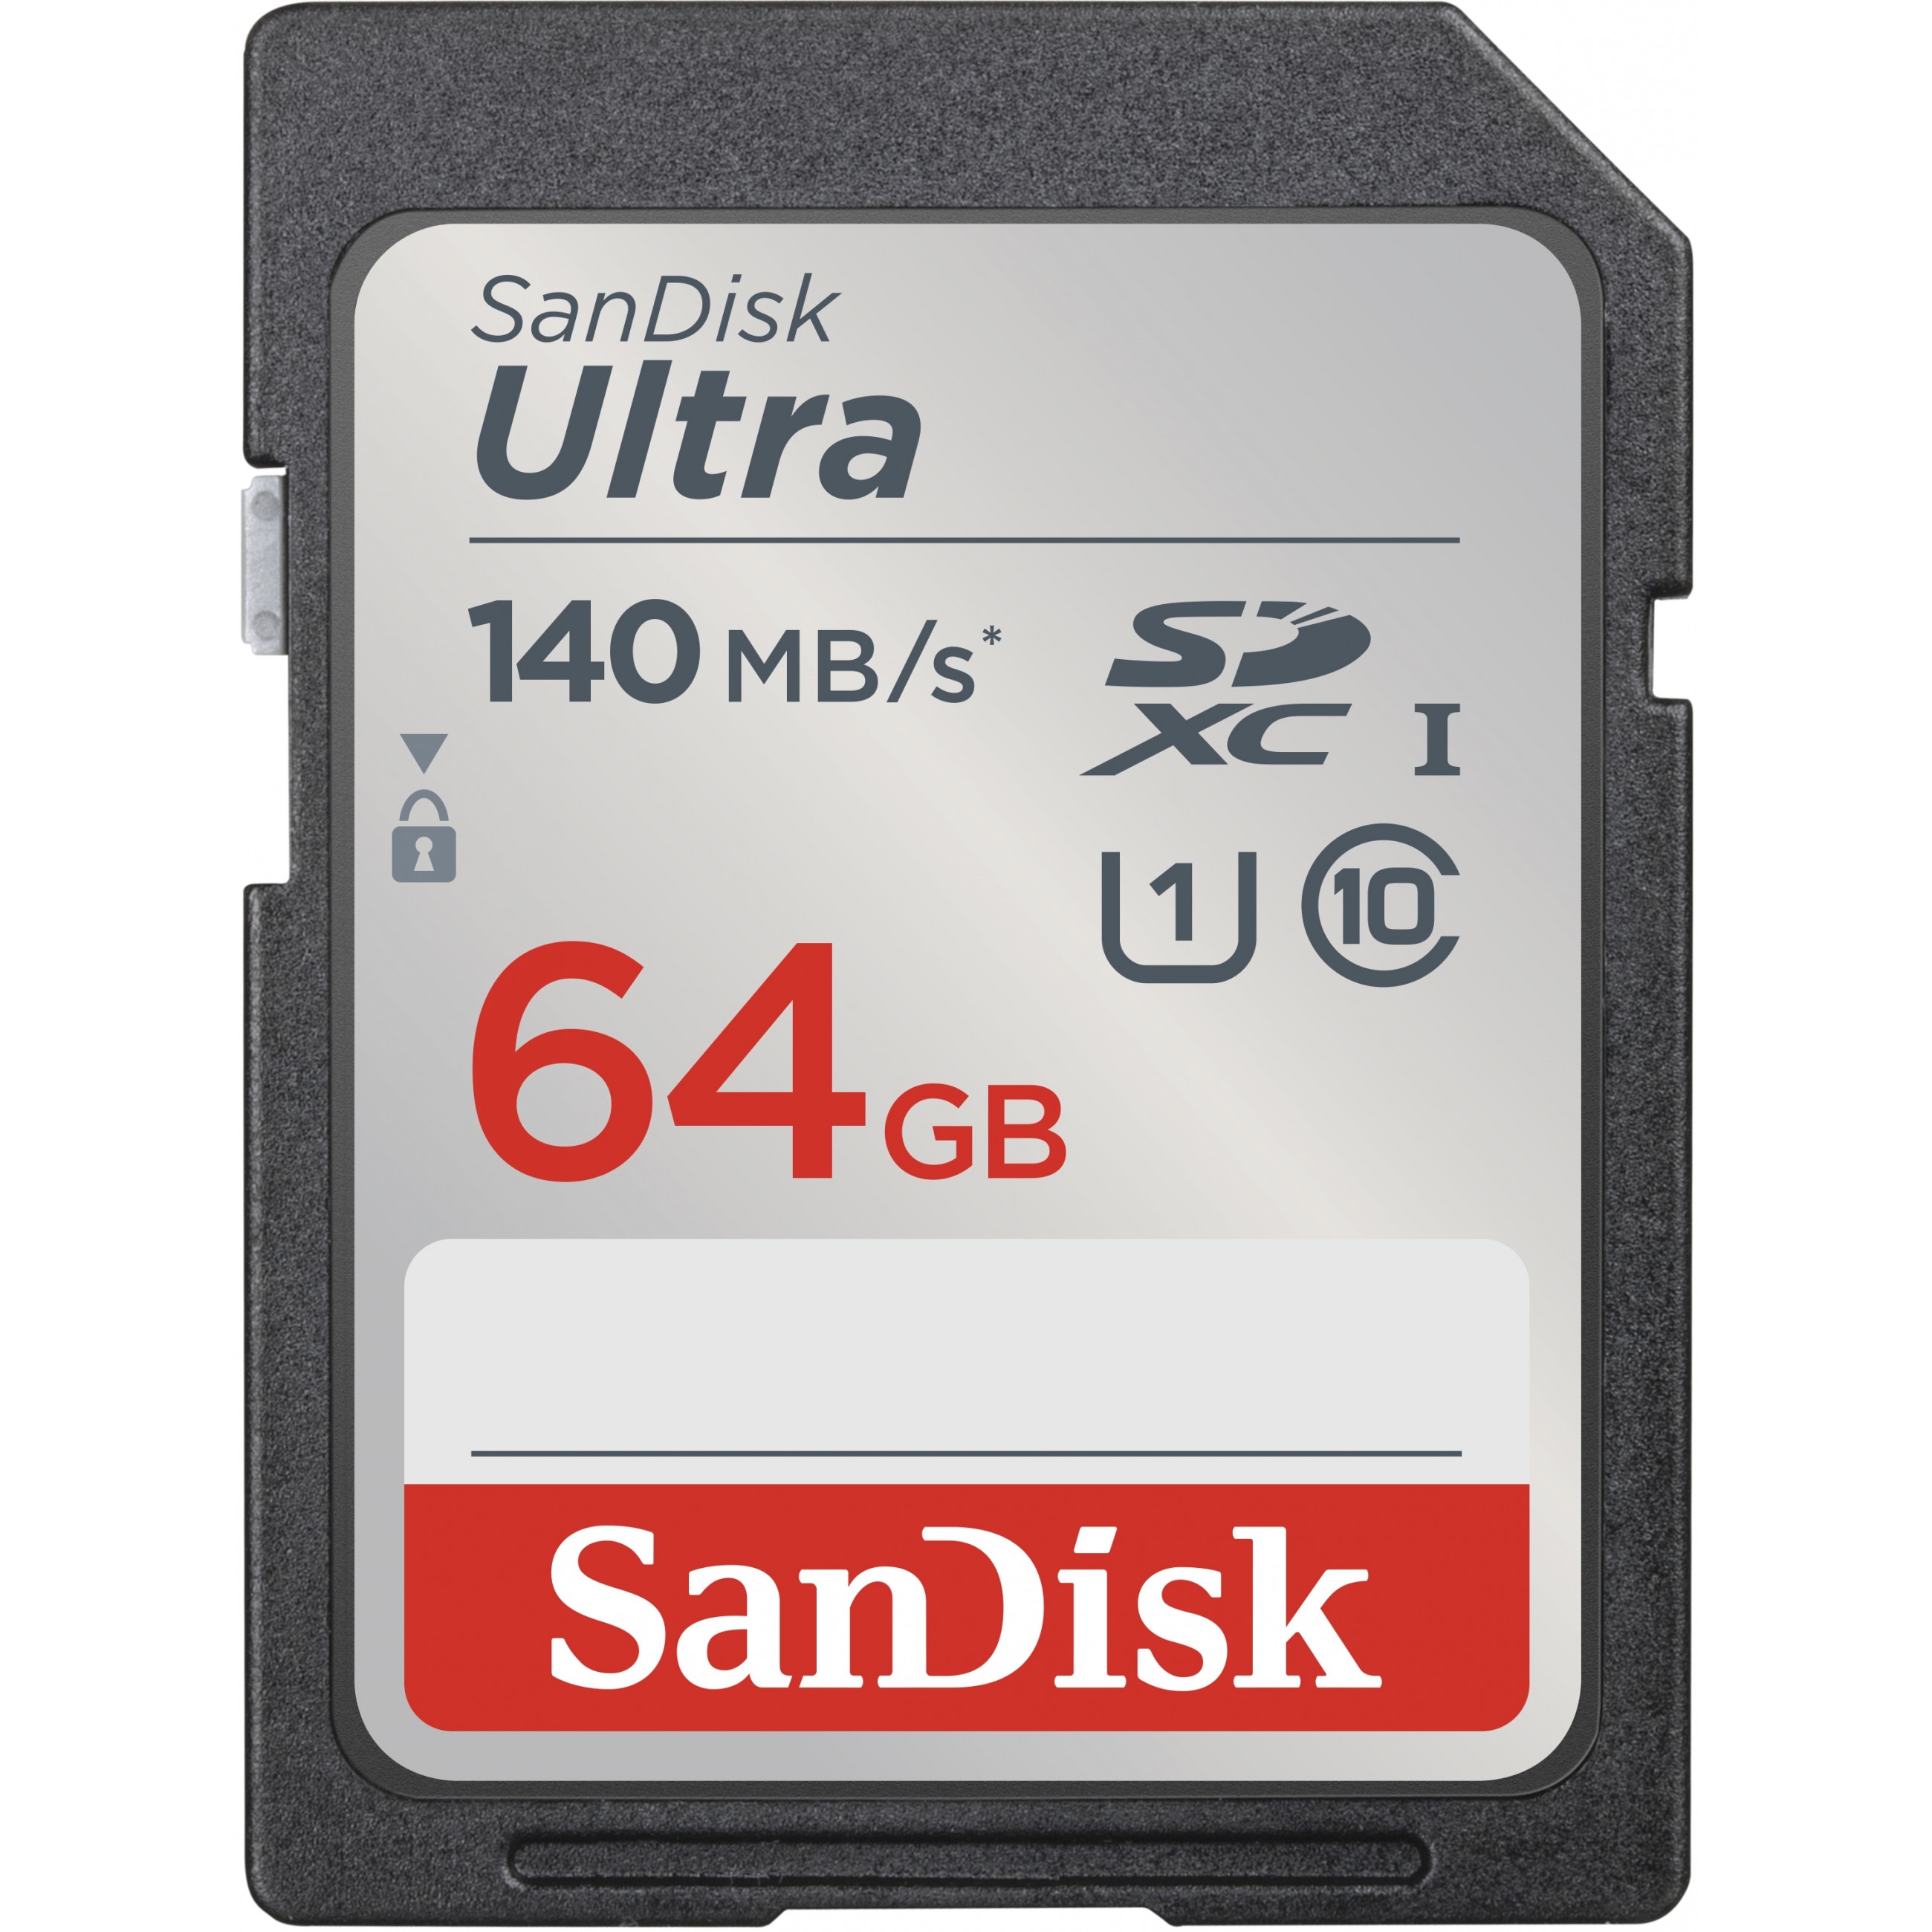 64GB SanDisk Ultra SDXC 140MB/s